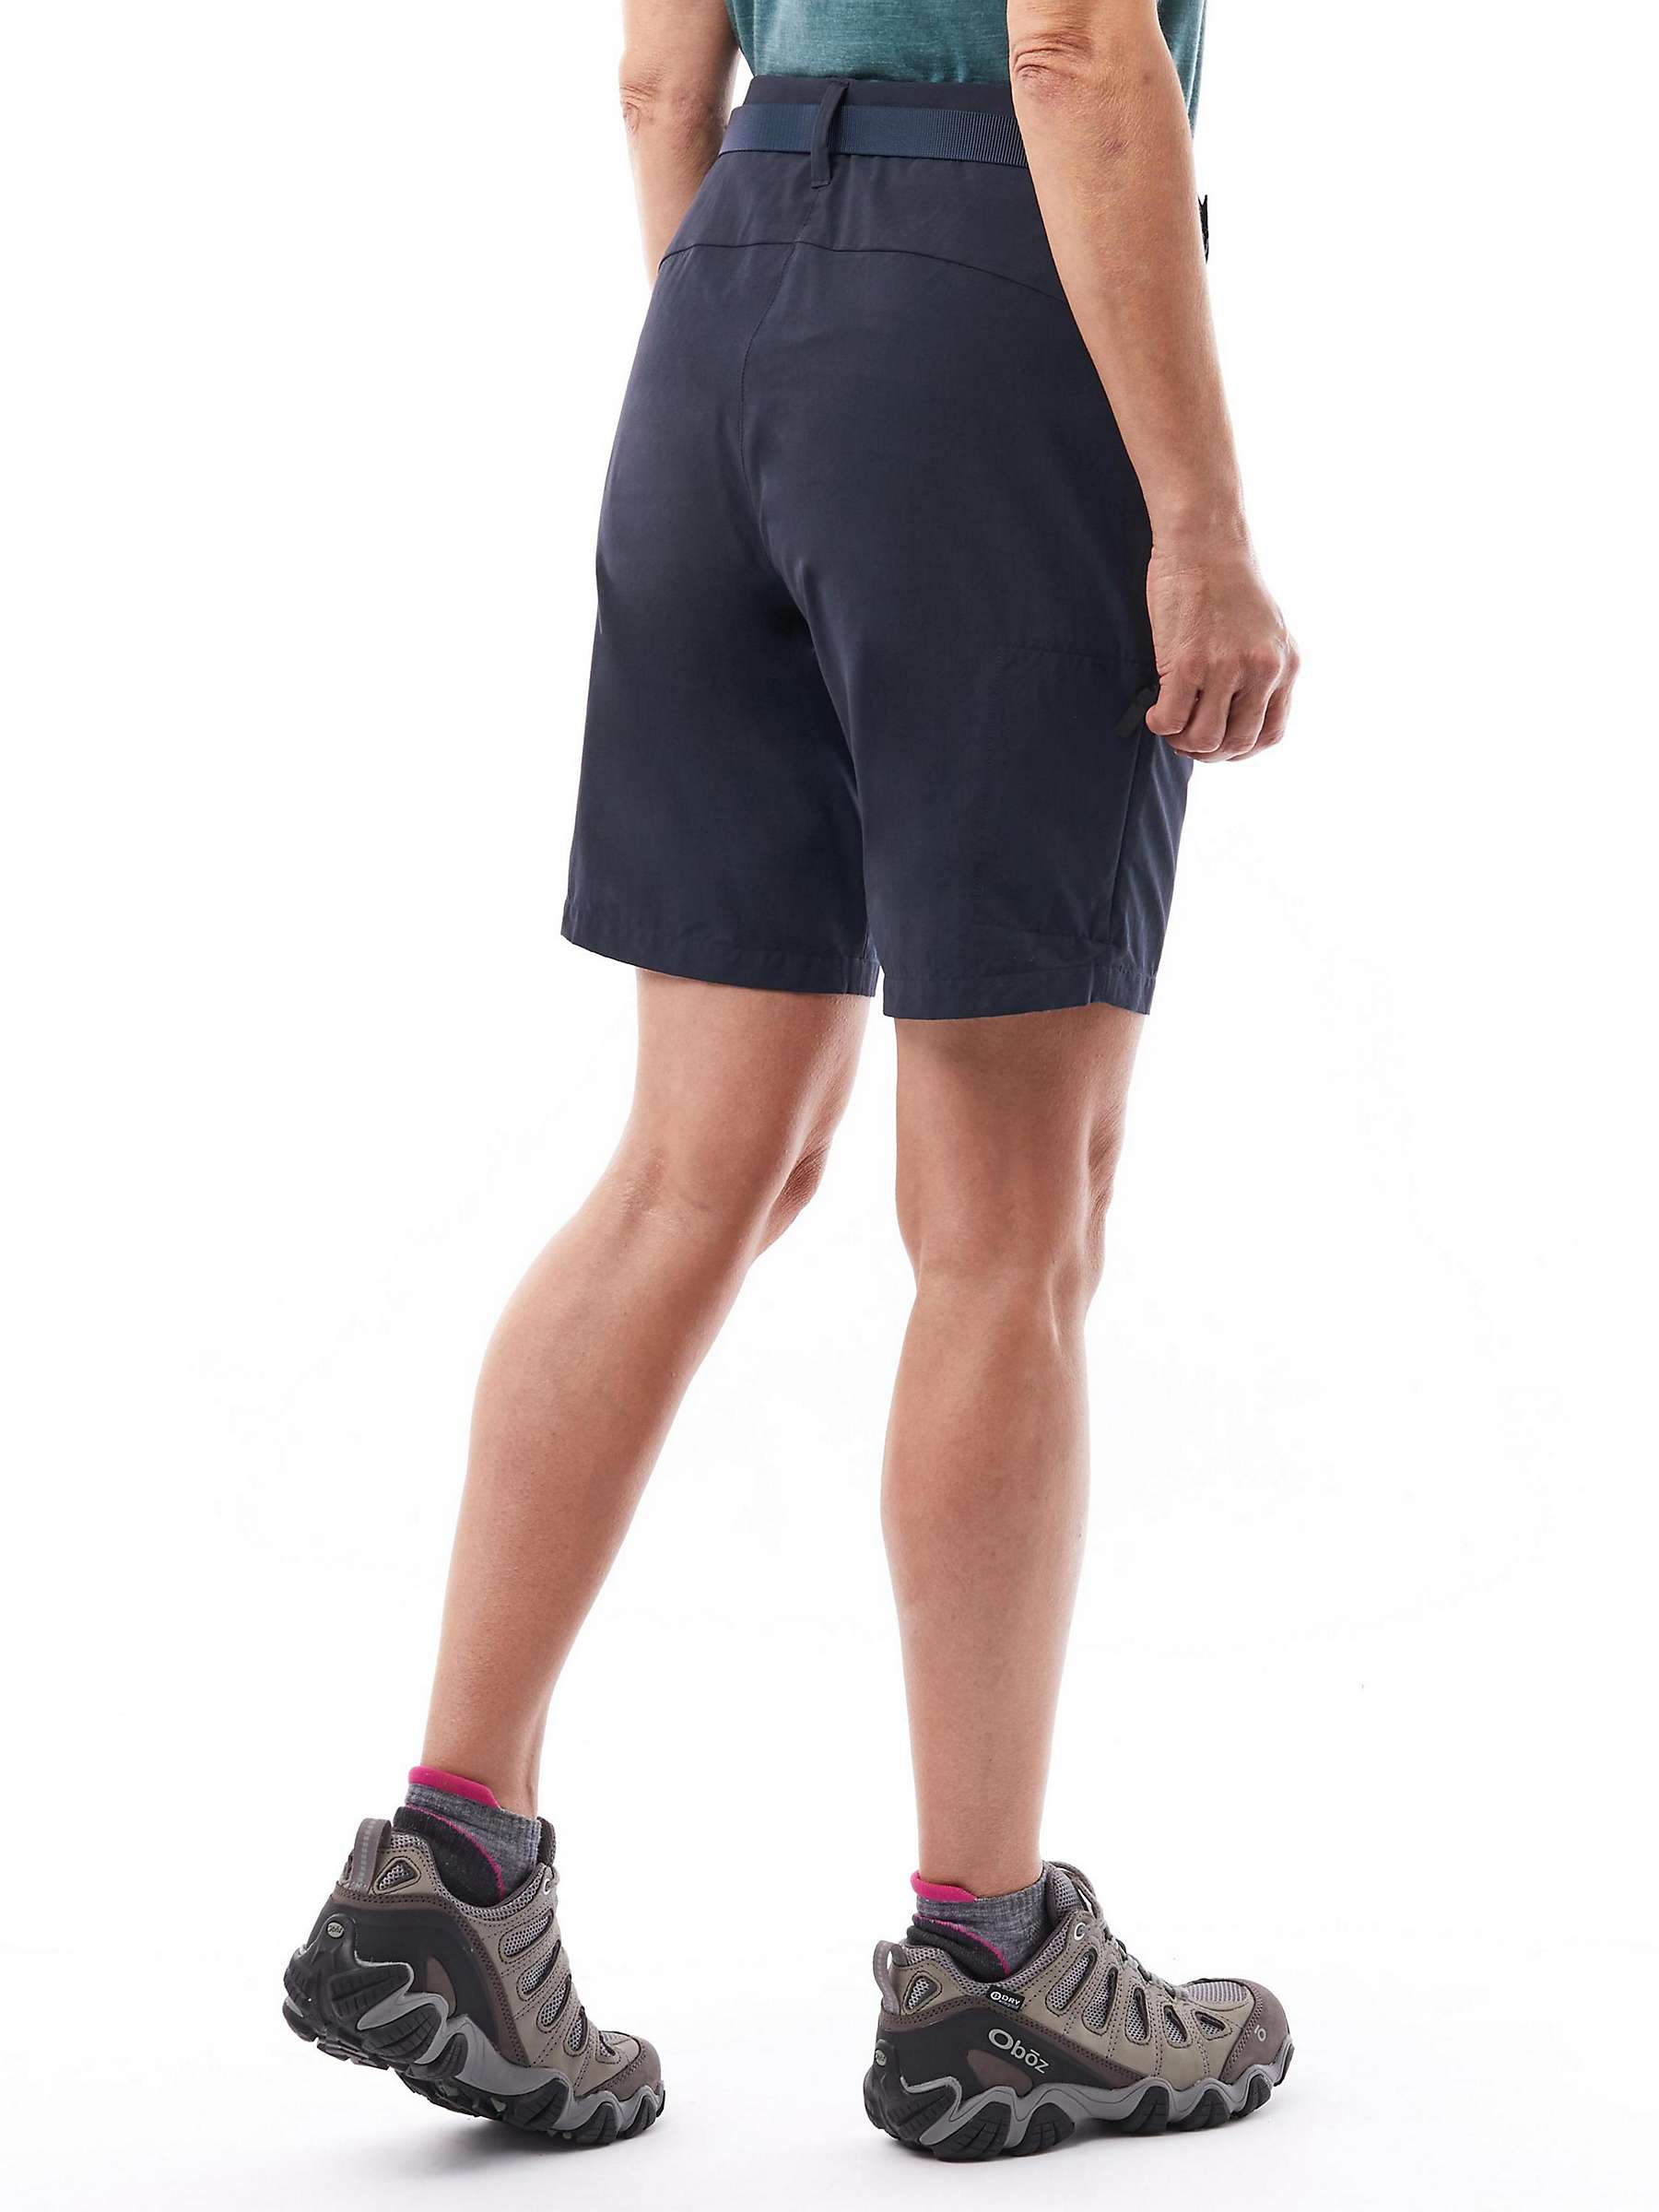 Buy Rohan Roamer Walking Shorts Online at johnlewis.com